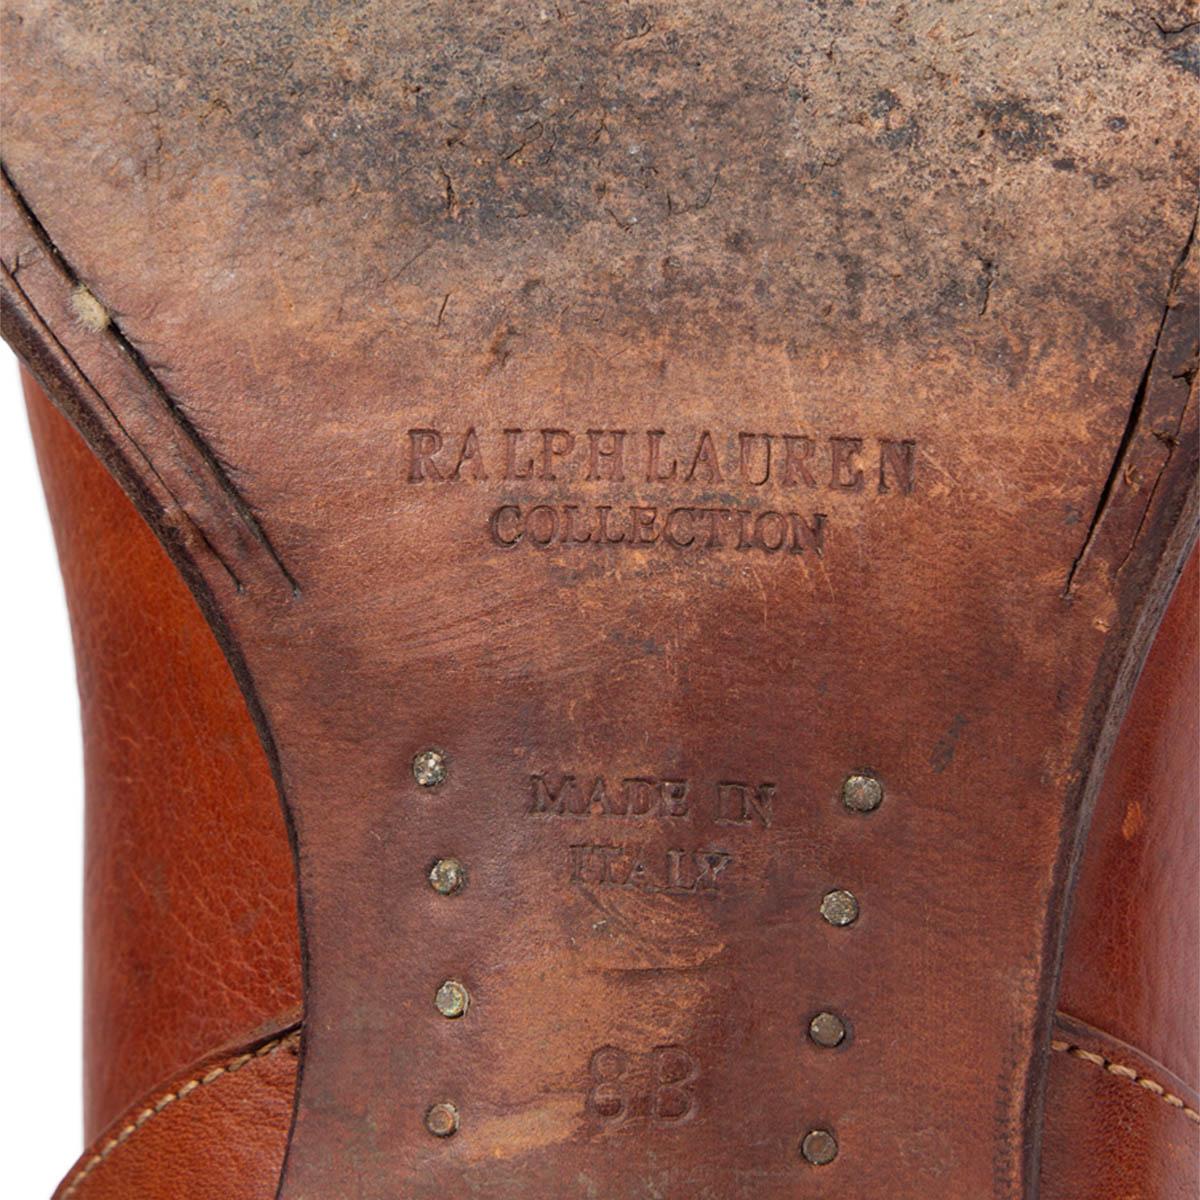 Women's RALPH LAUREN cognac brown leather HARNESS COWBOY Boots Shoes 8 B